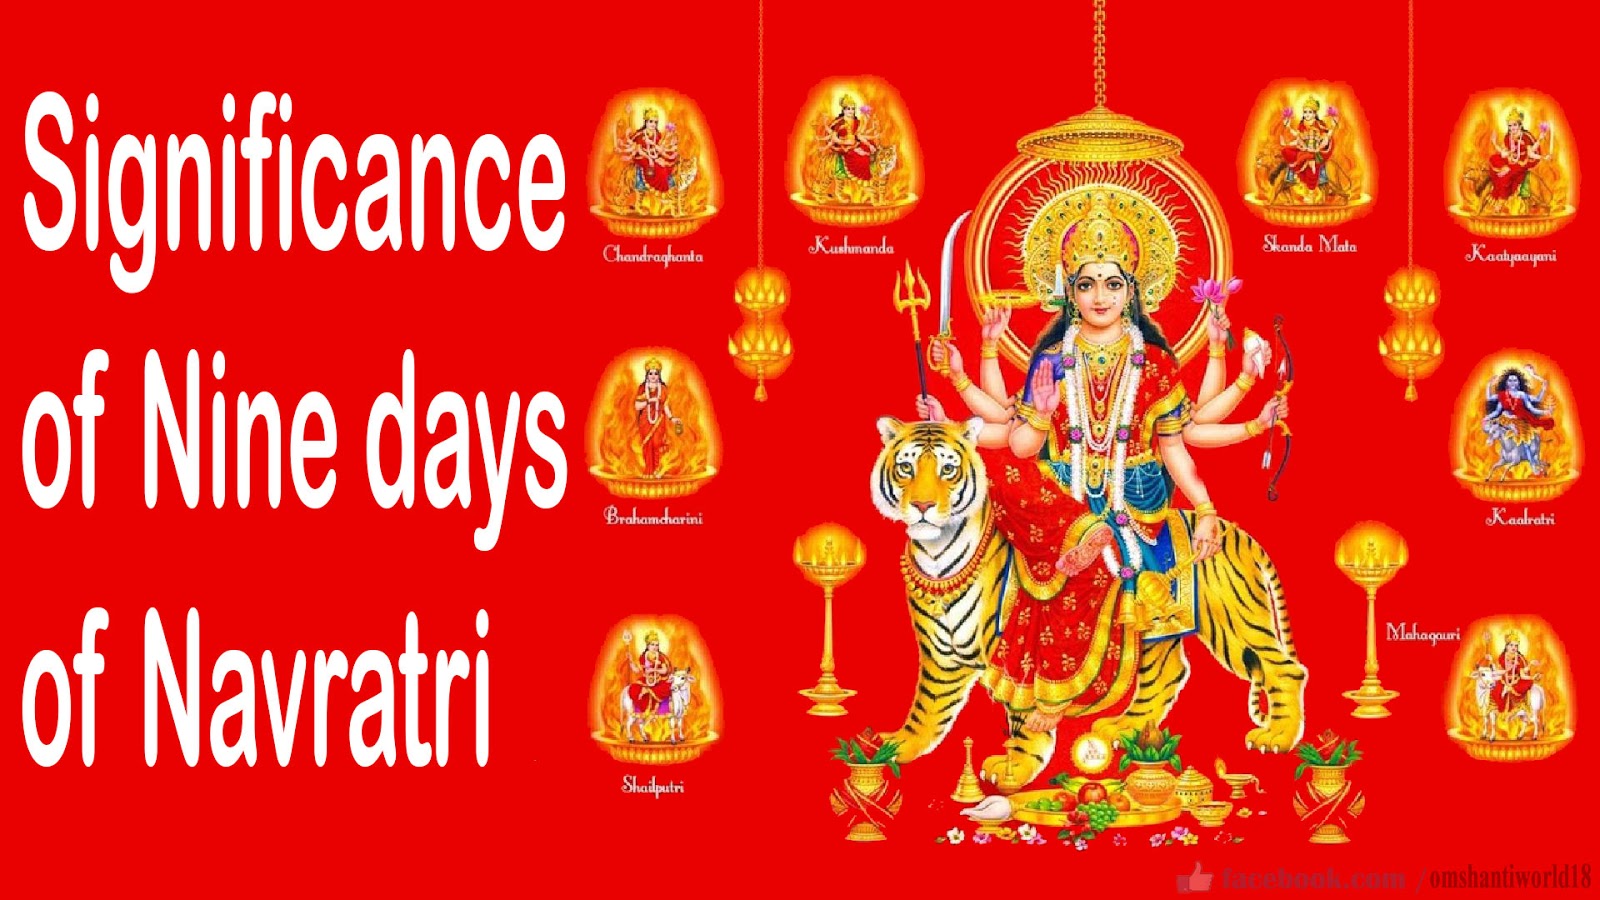 Significance of Nine days of Navratri